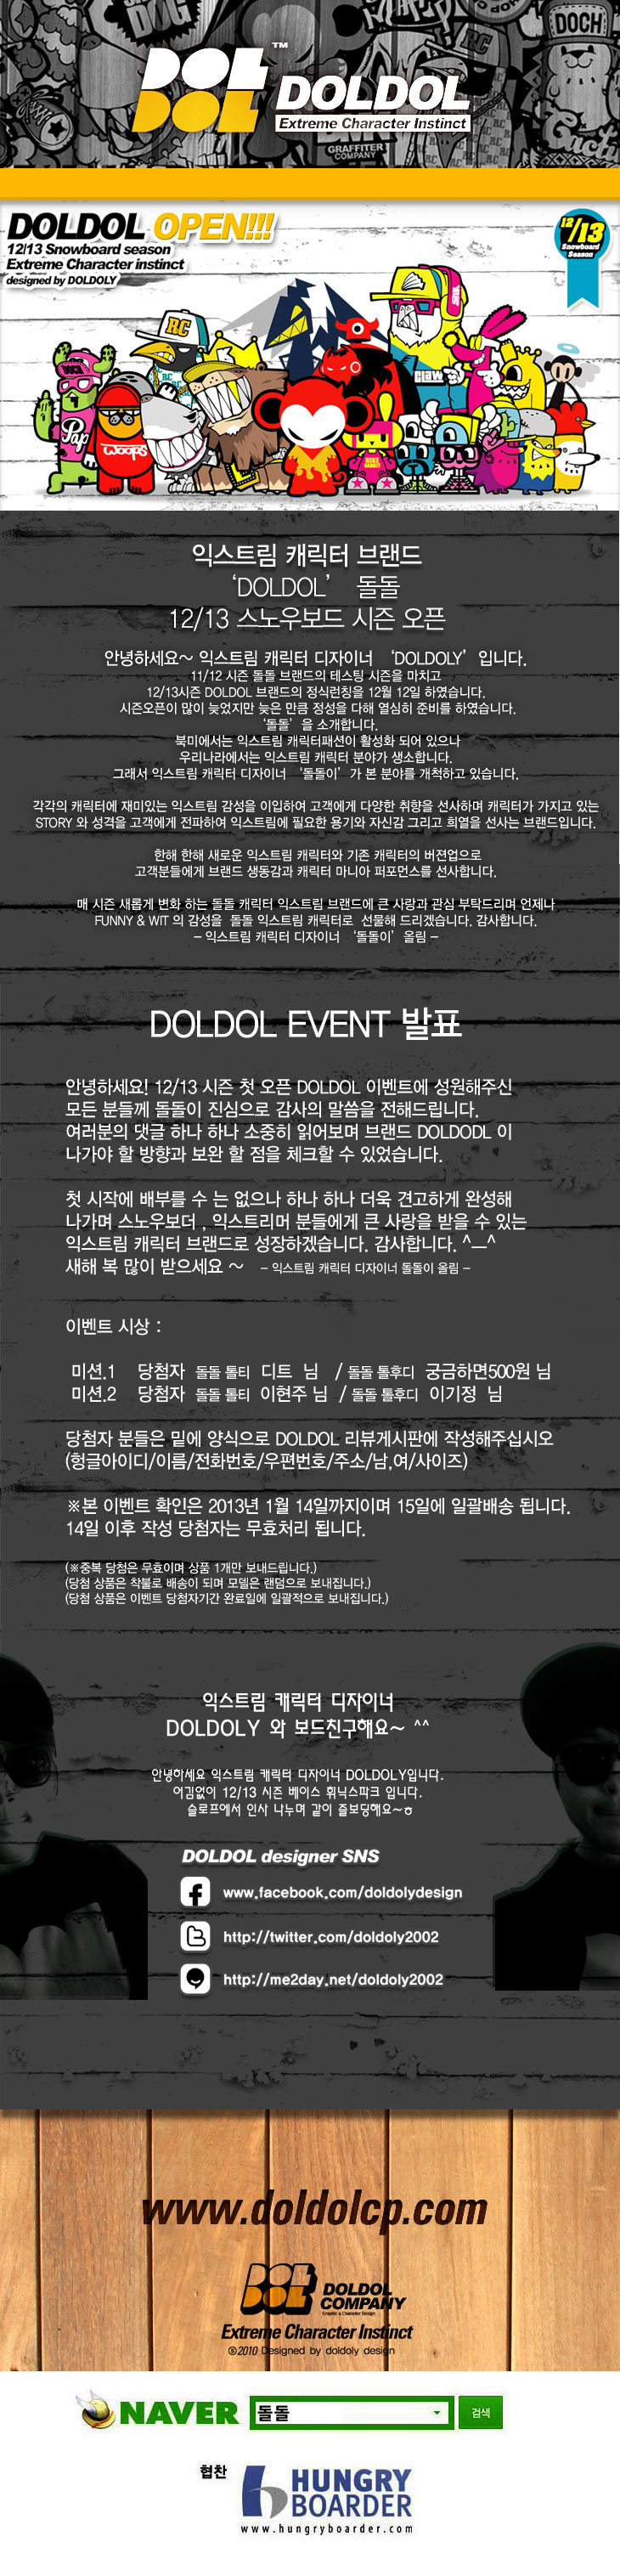 doldol-event-b.jpg